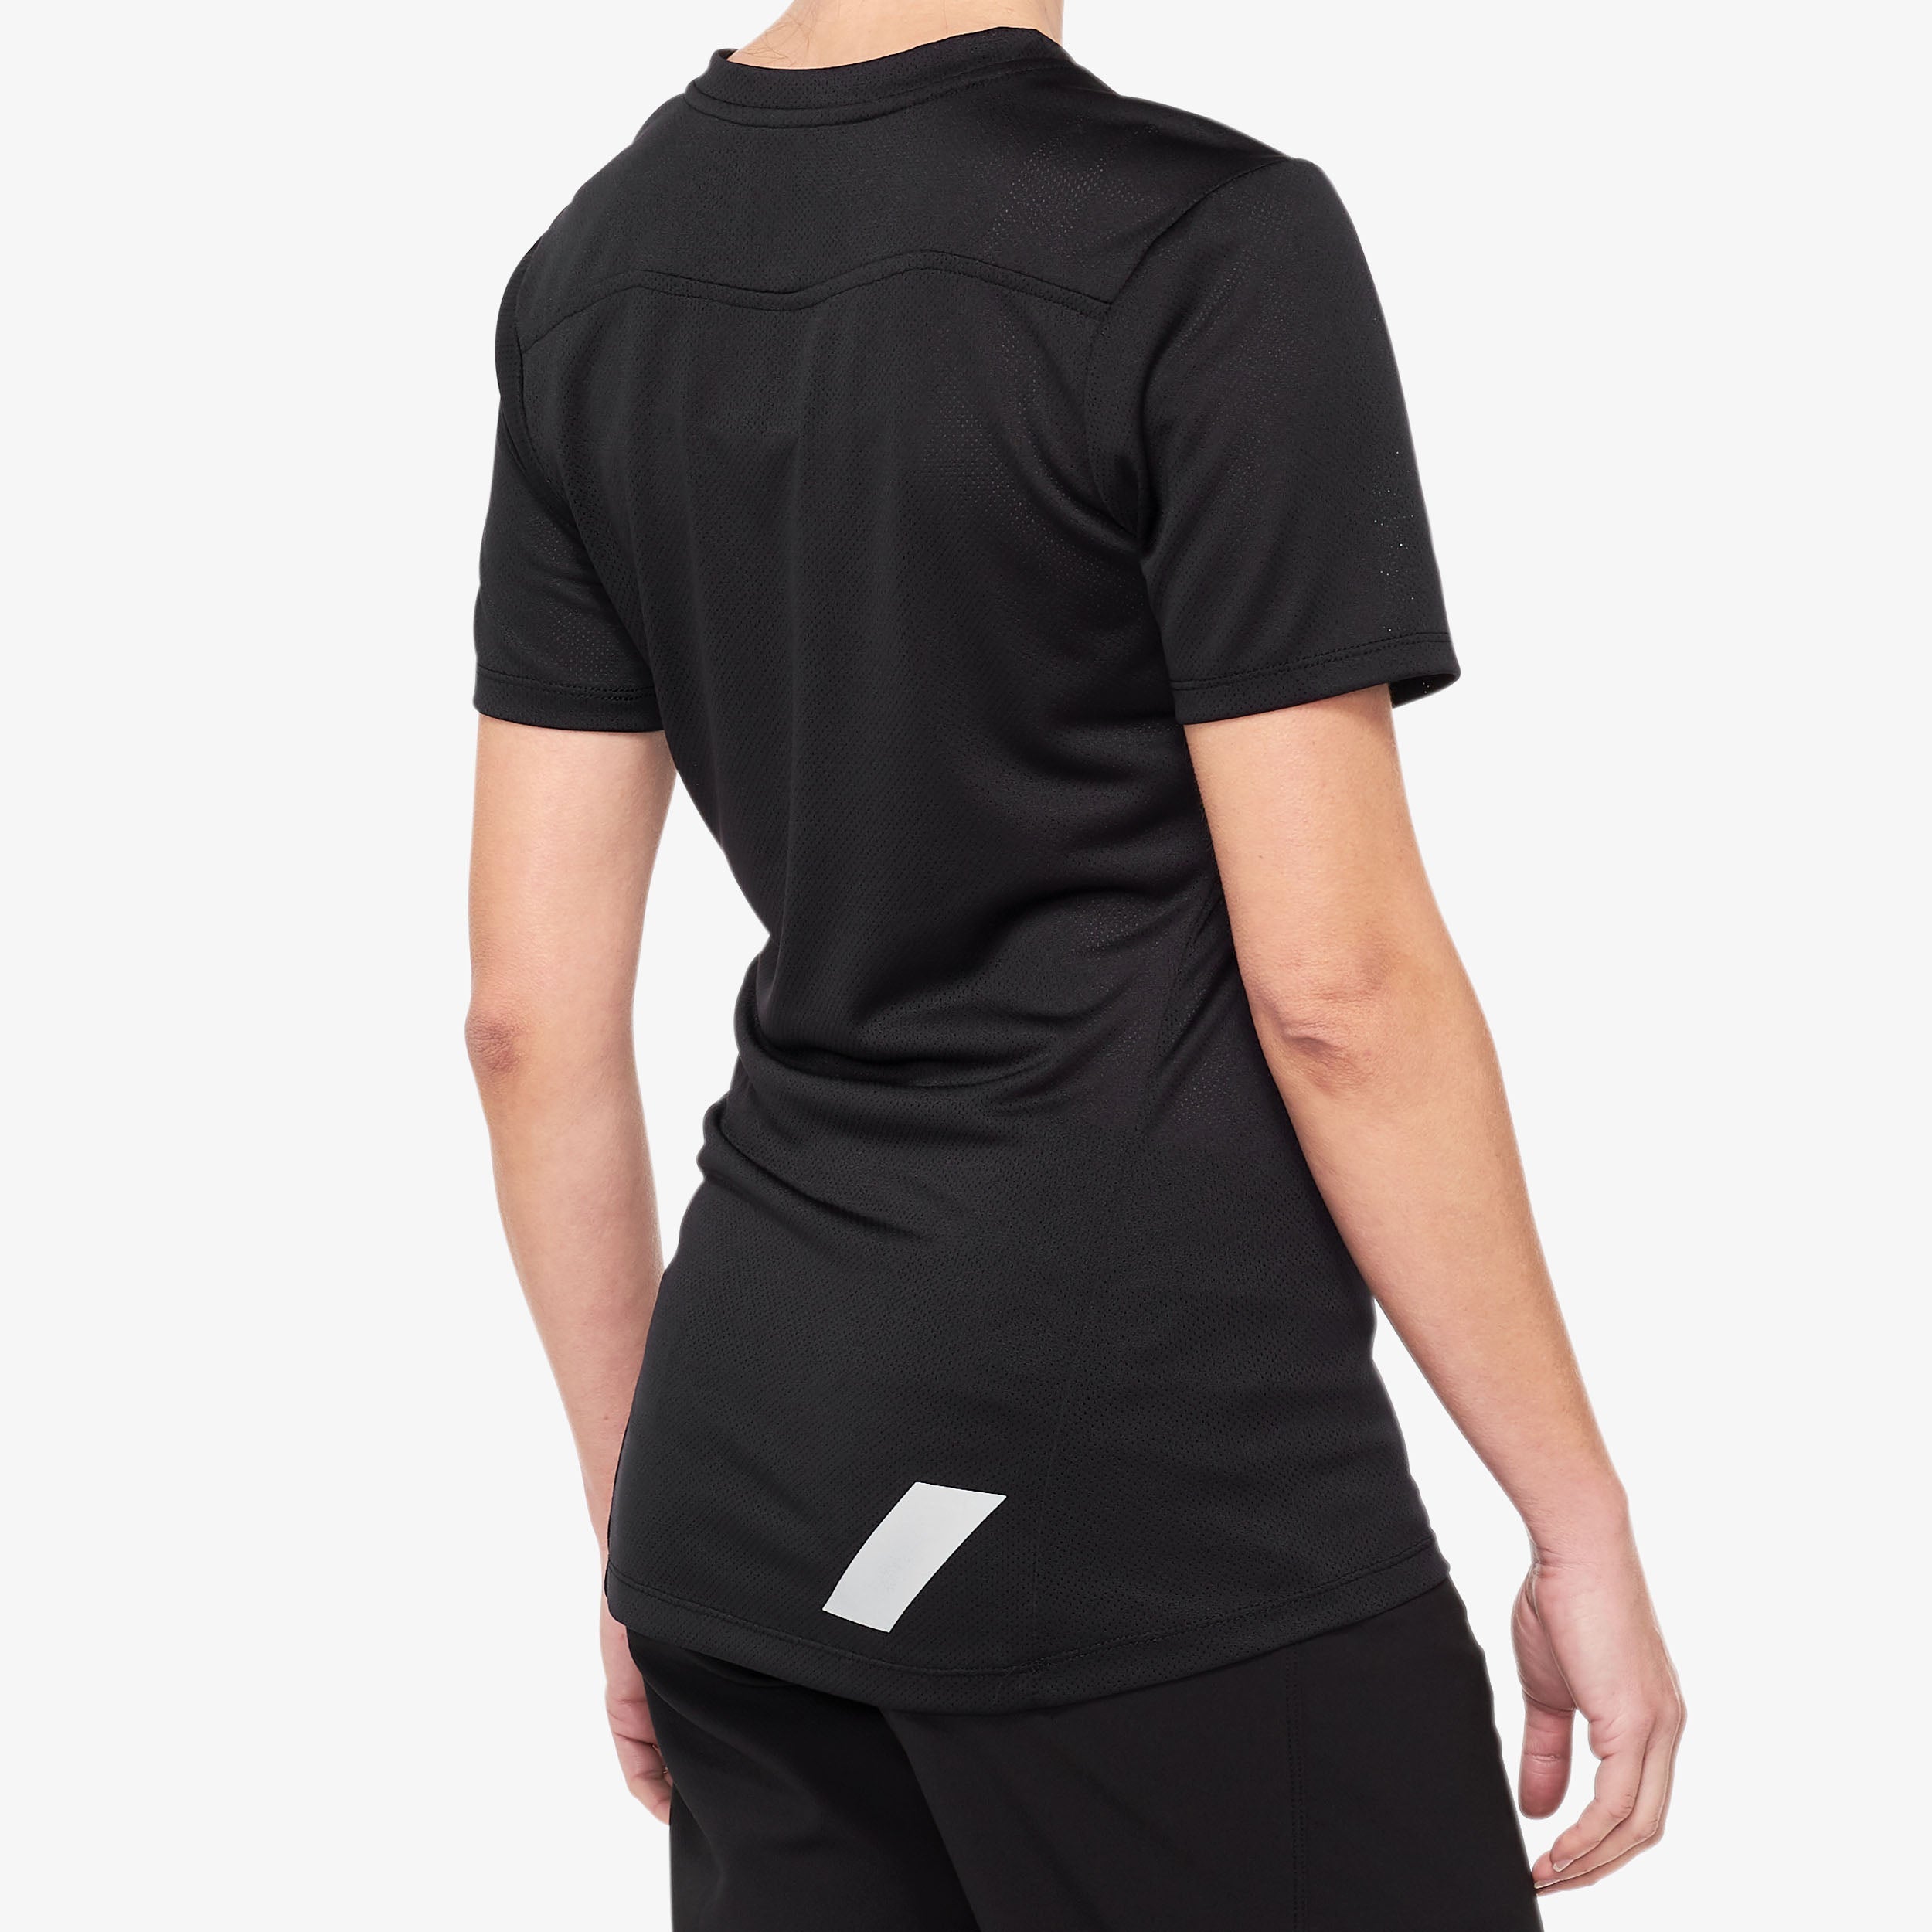 RIDECAMP Women's Short Sleeve Jersey Black/Grey